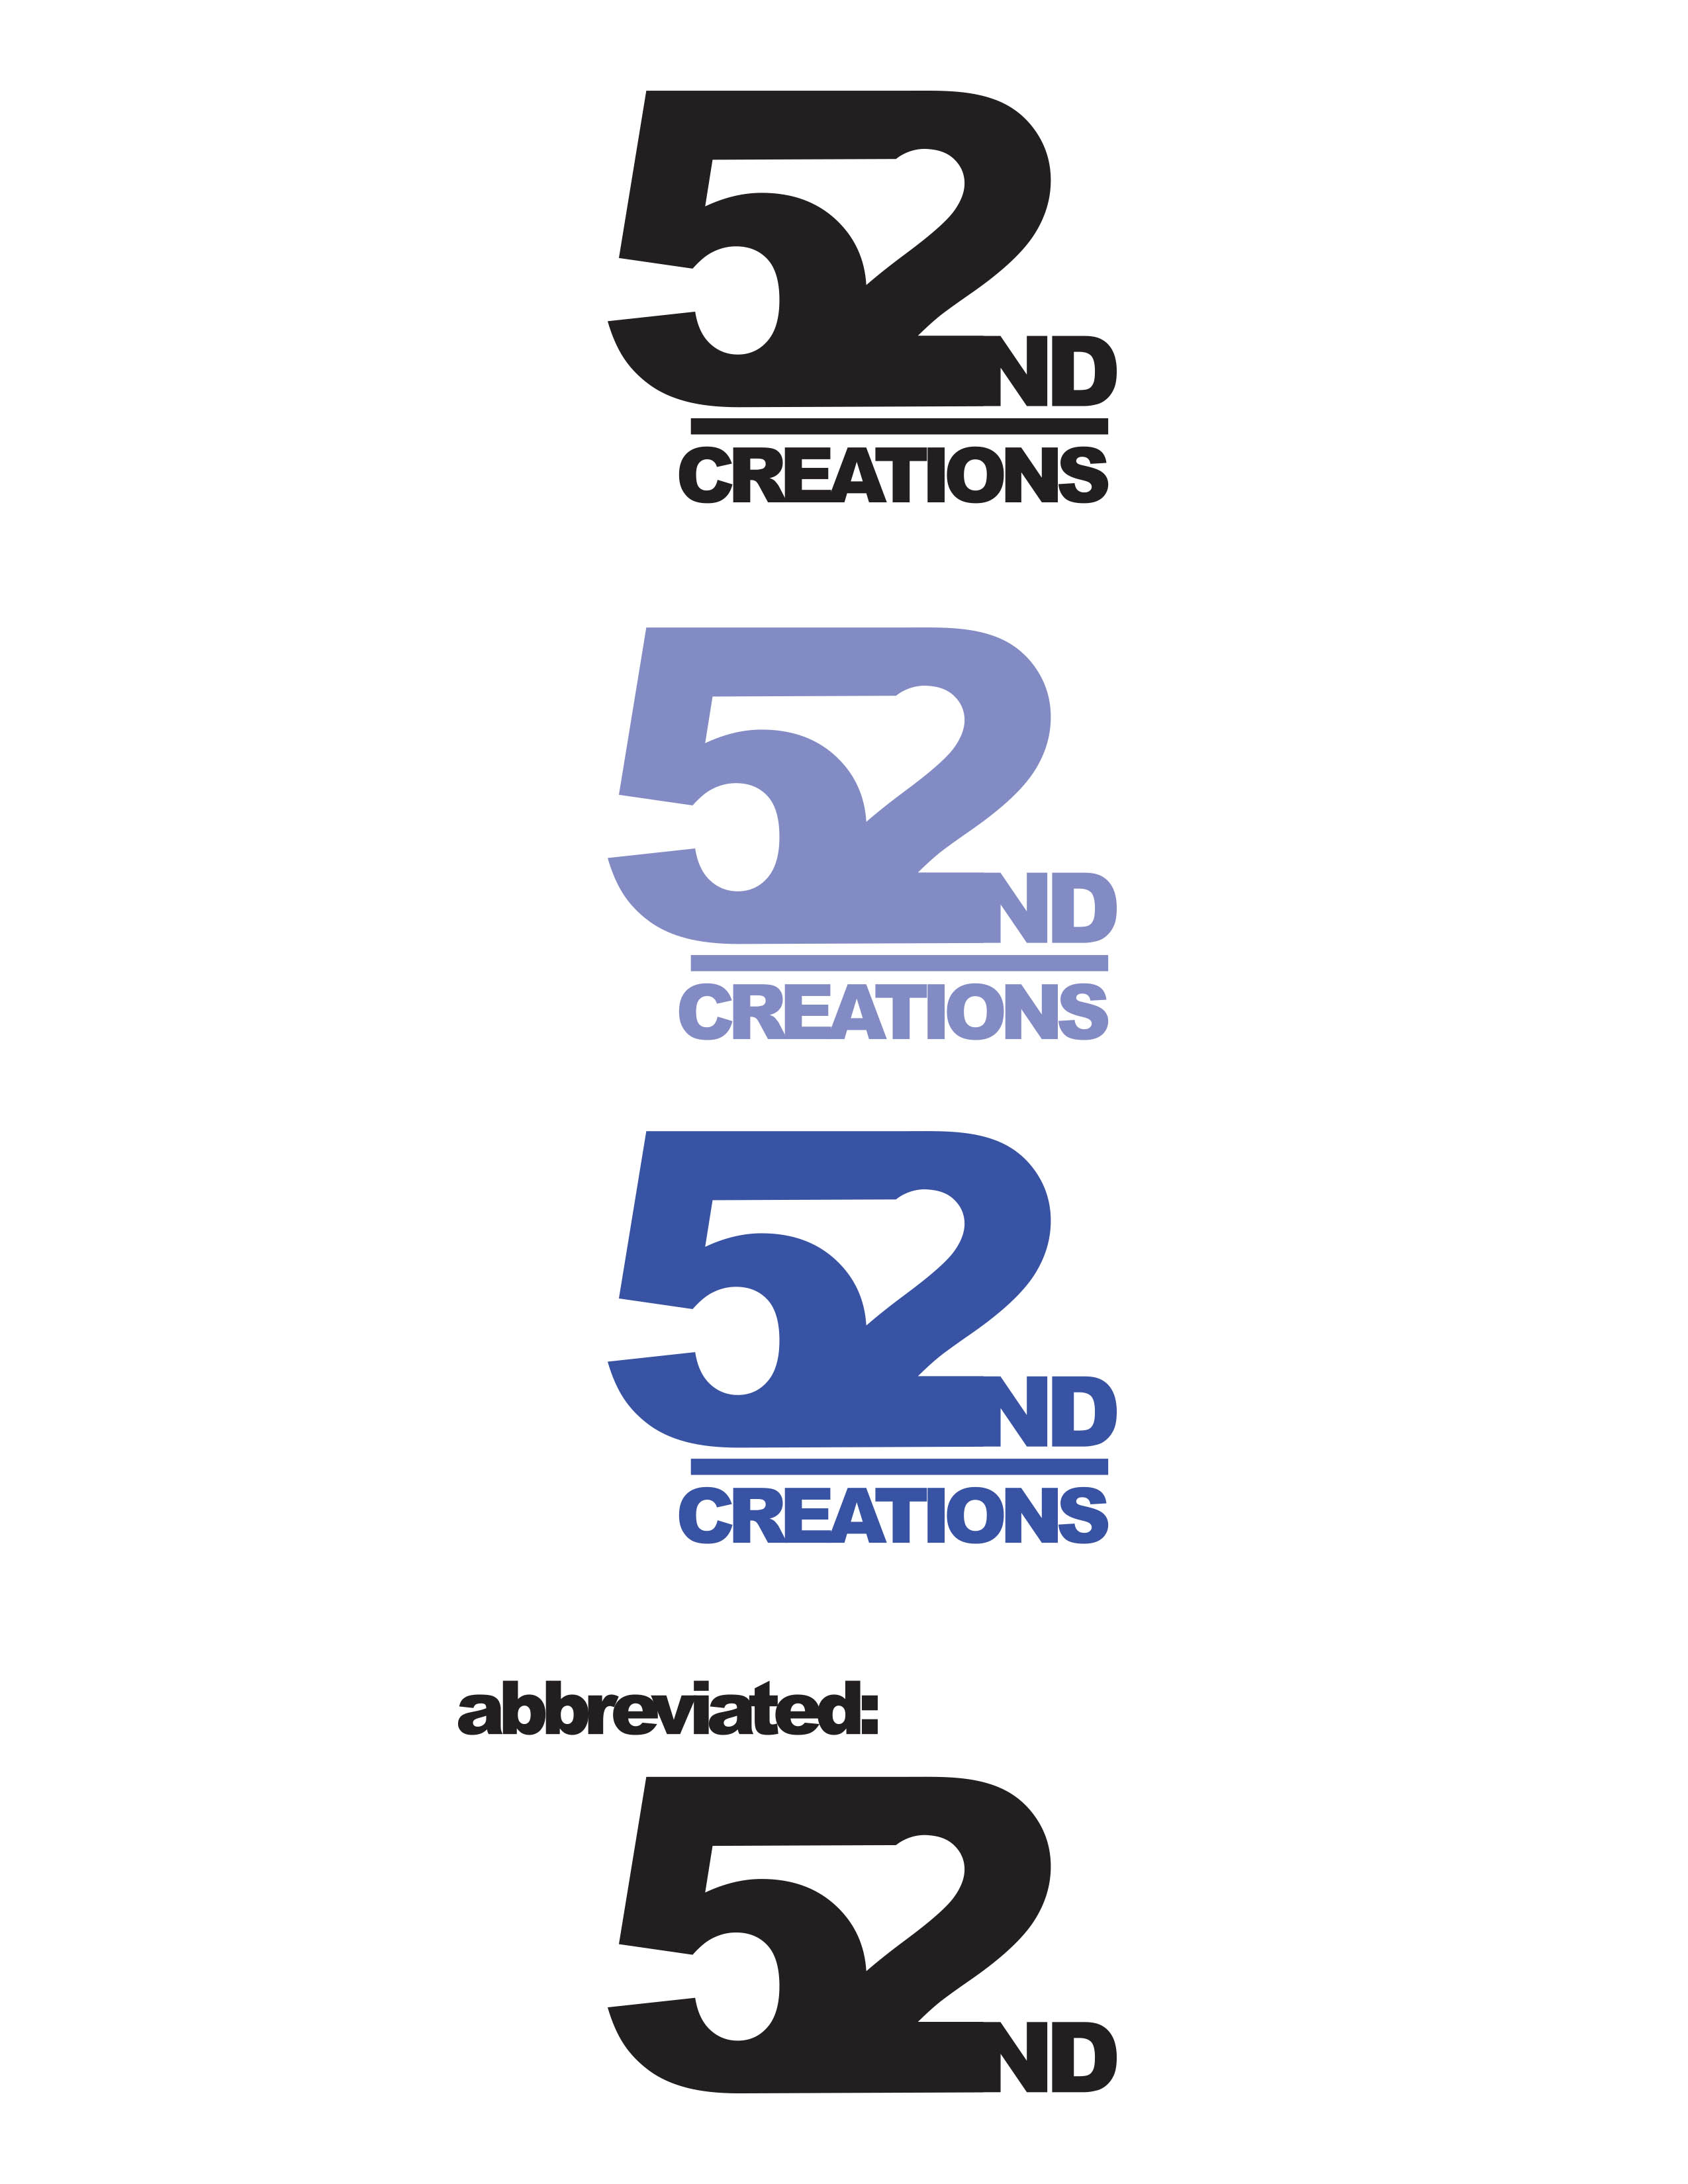 52 CREATIONS